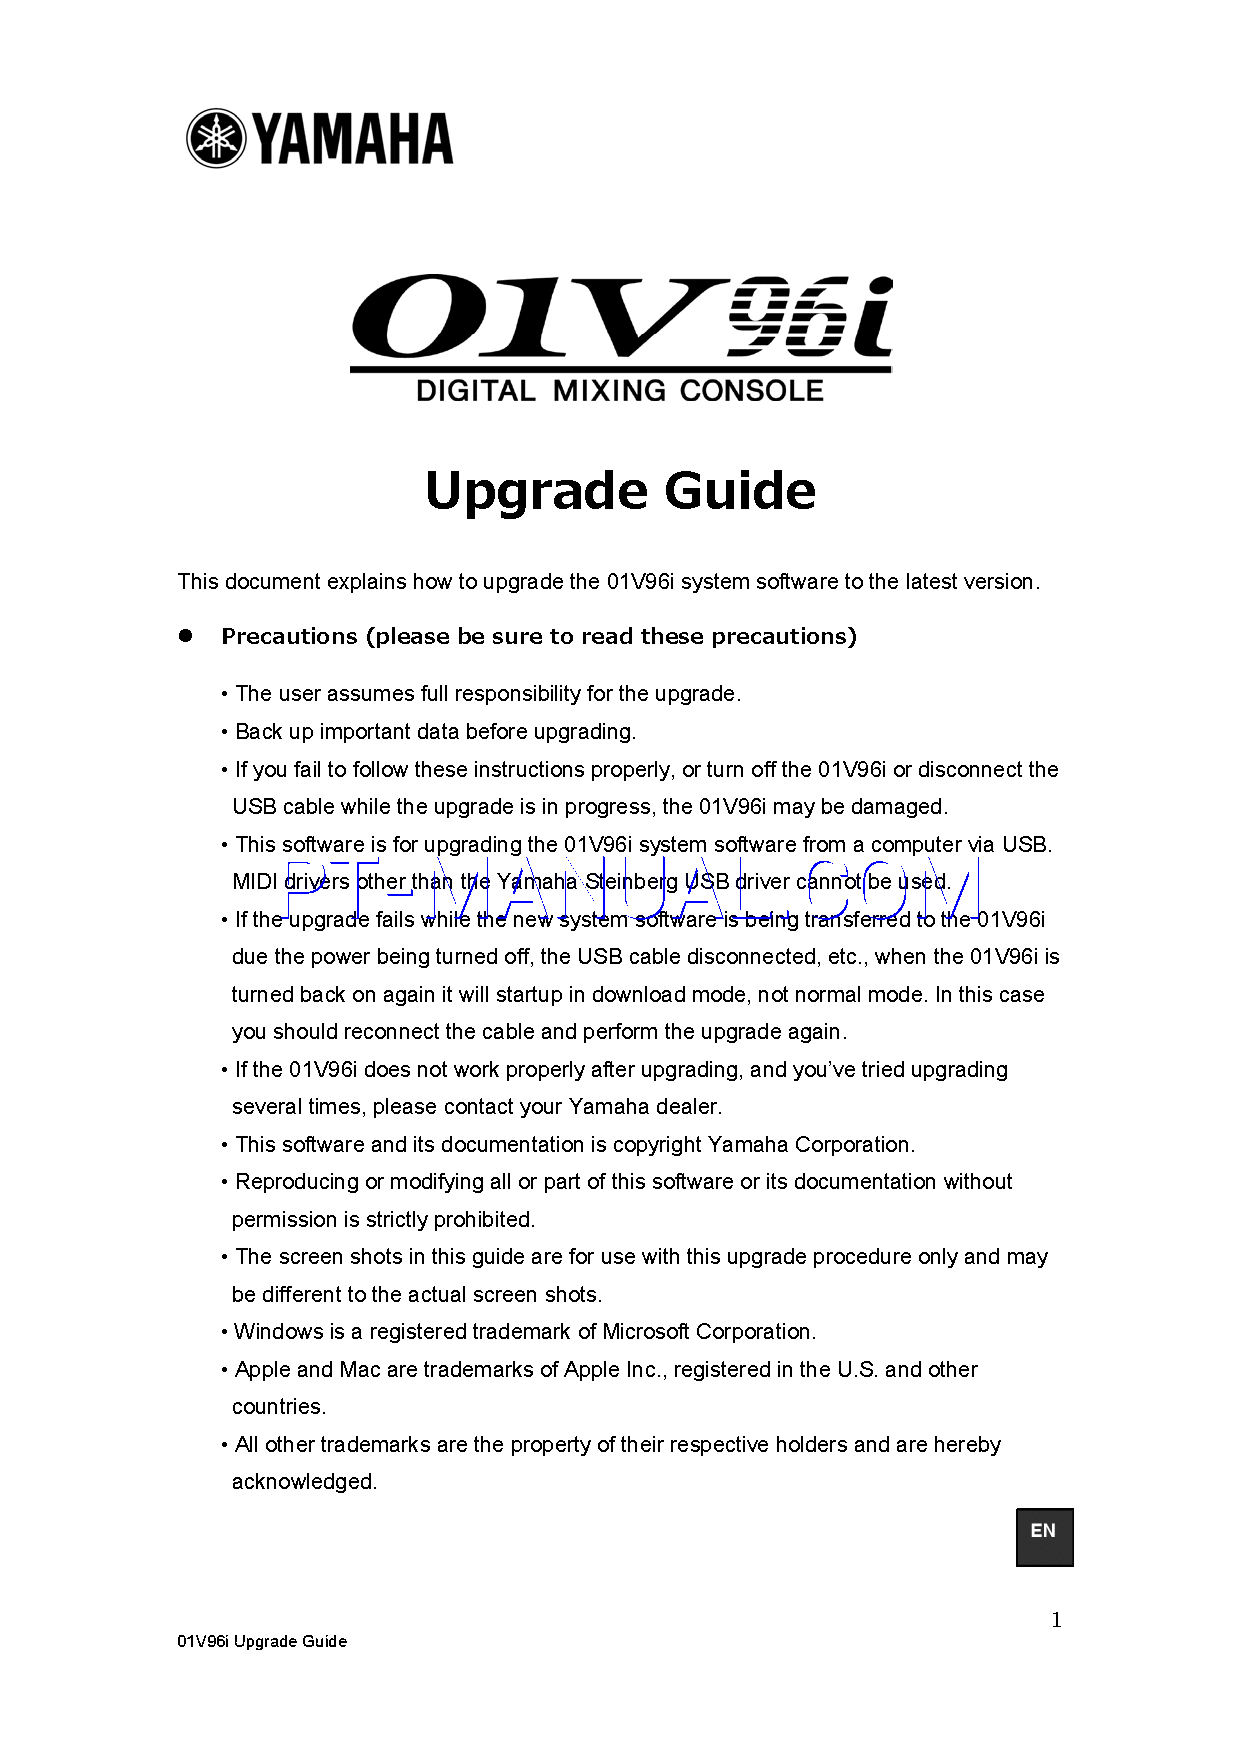 Read online Upgrade Guide for Yamaha 01V96i (Page 1)